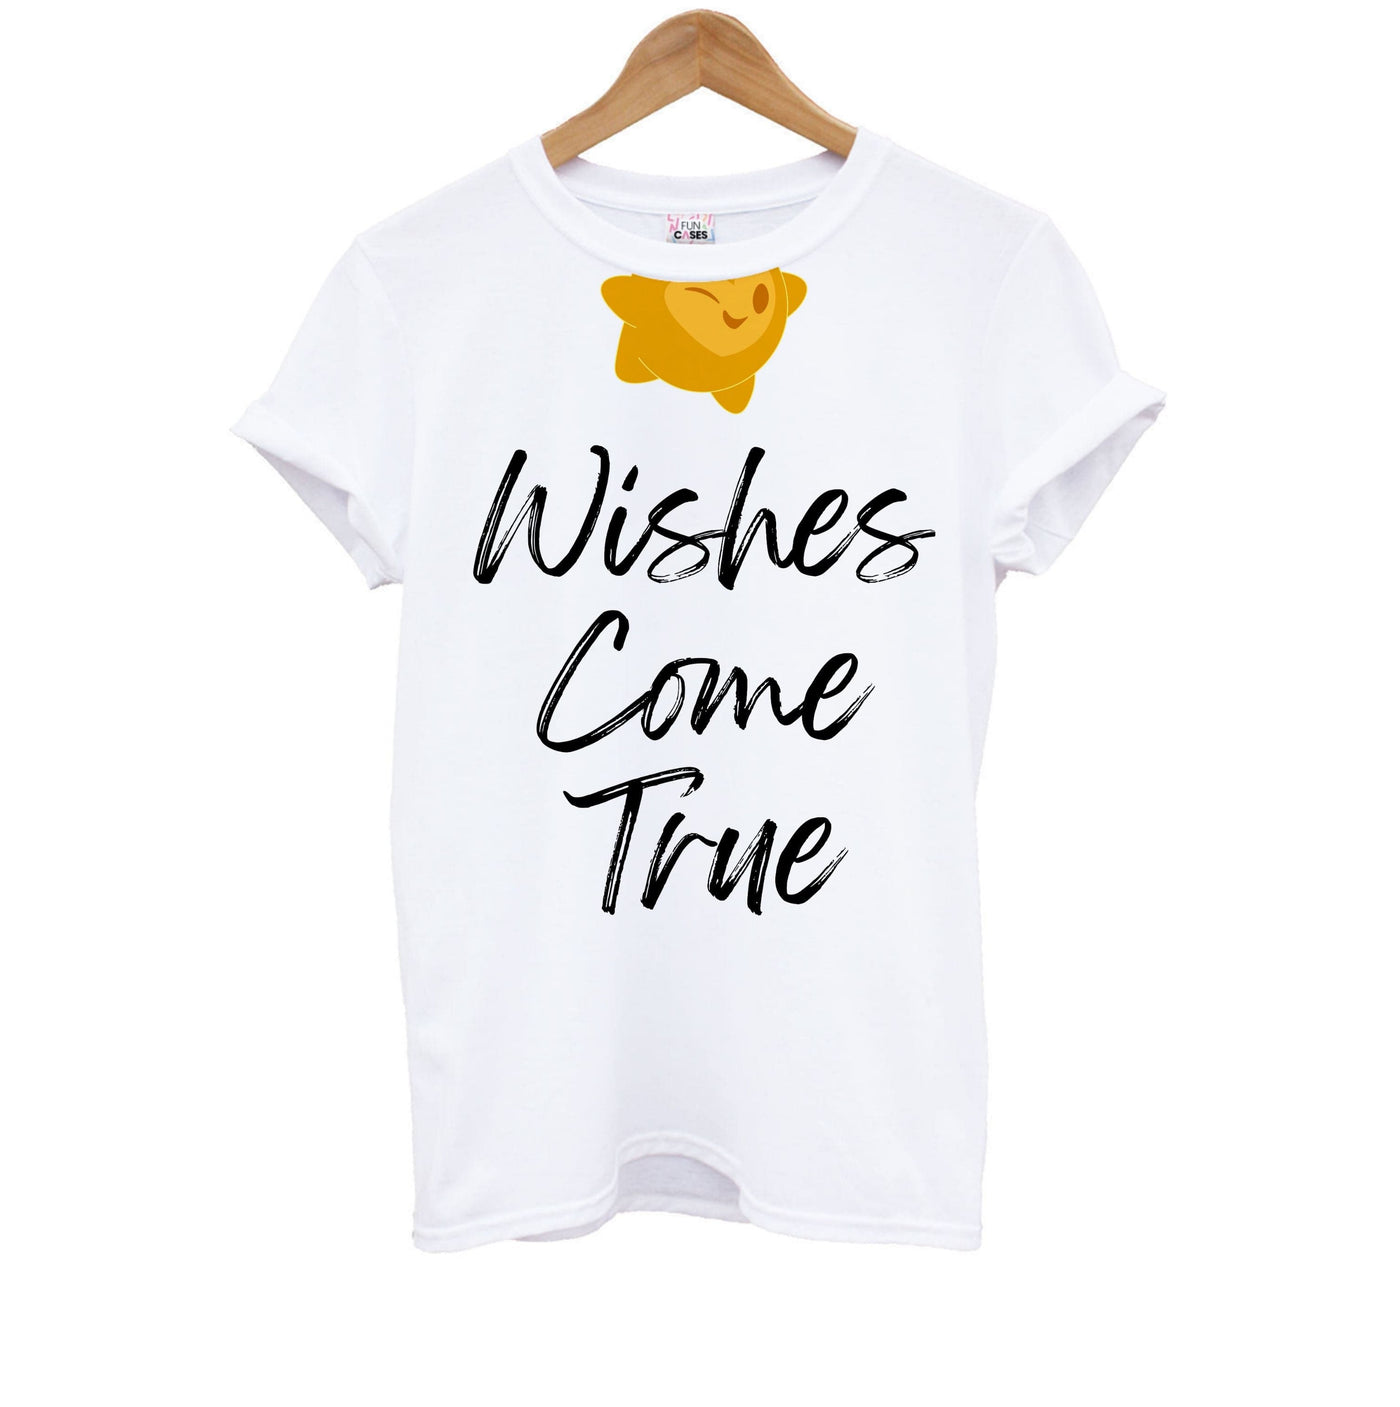 Wishes Come True - Wish Kids T-Shirt